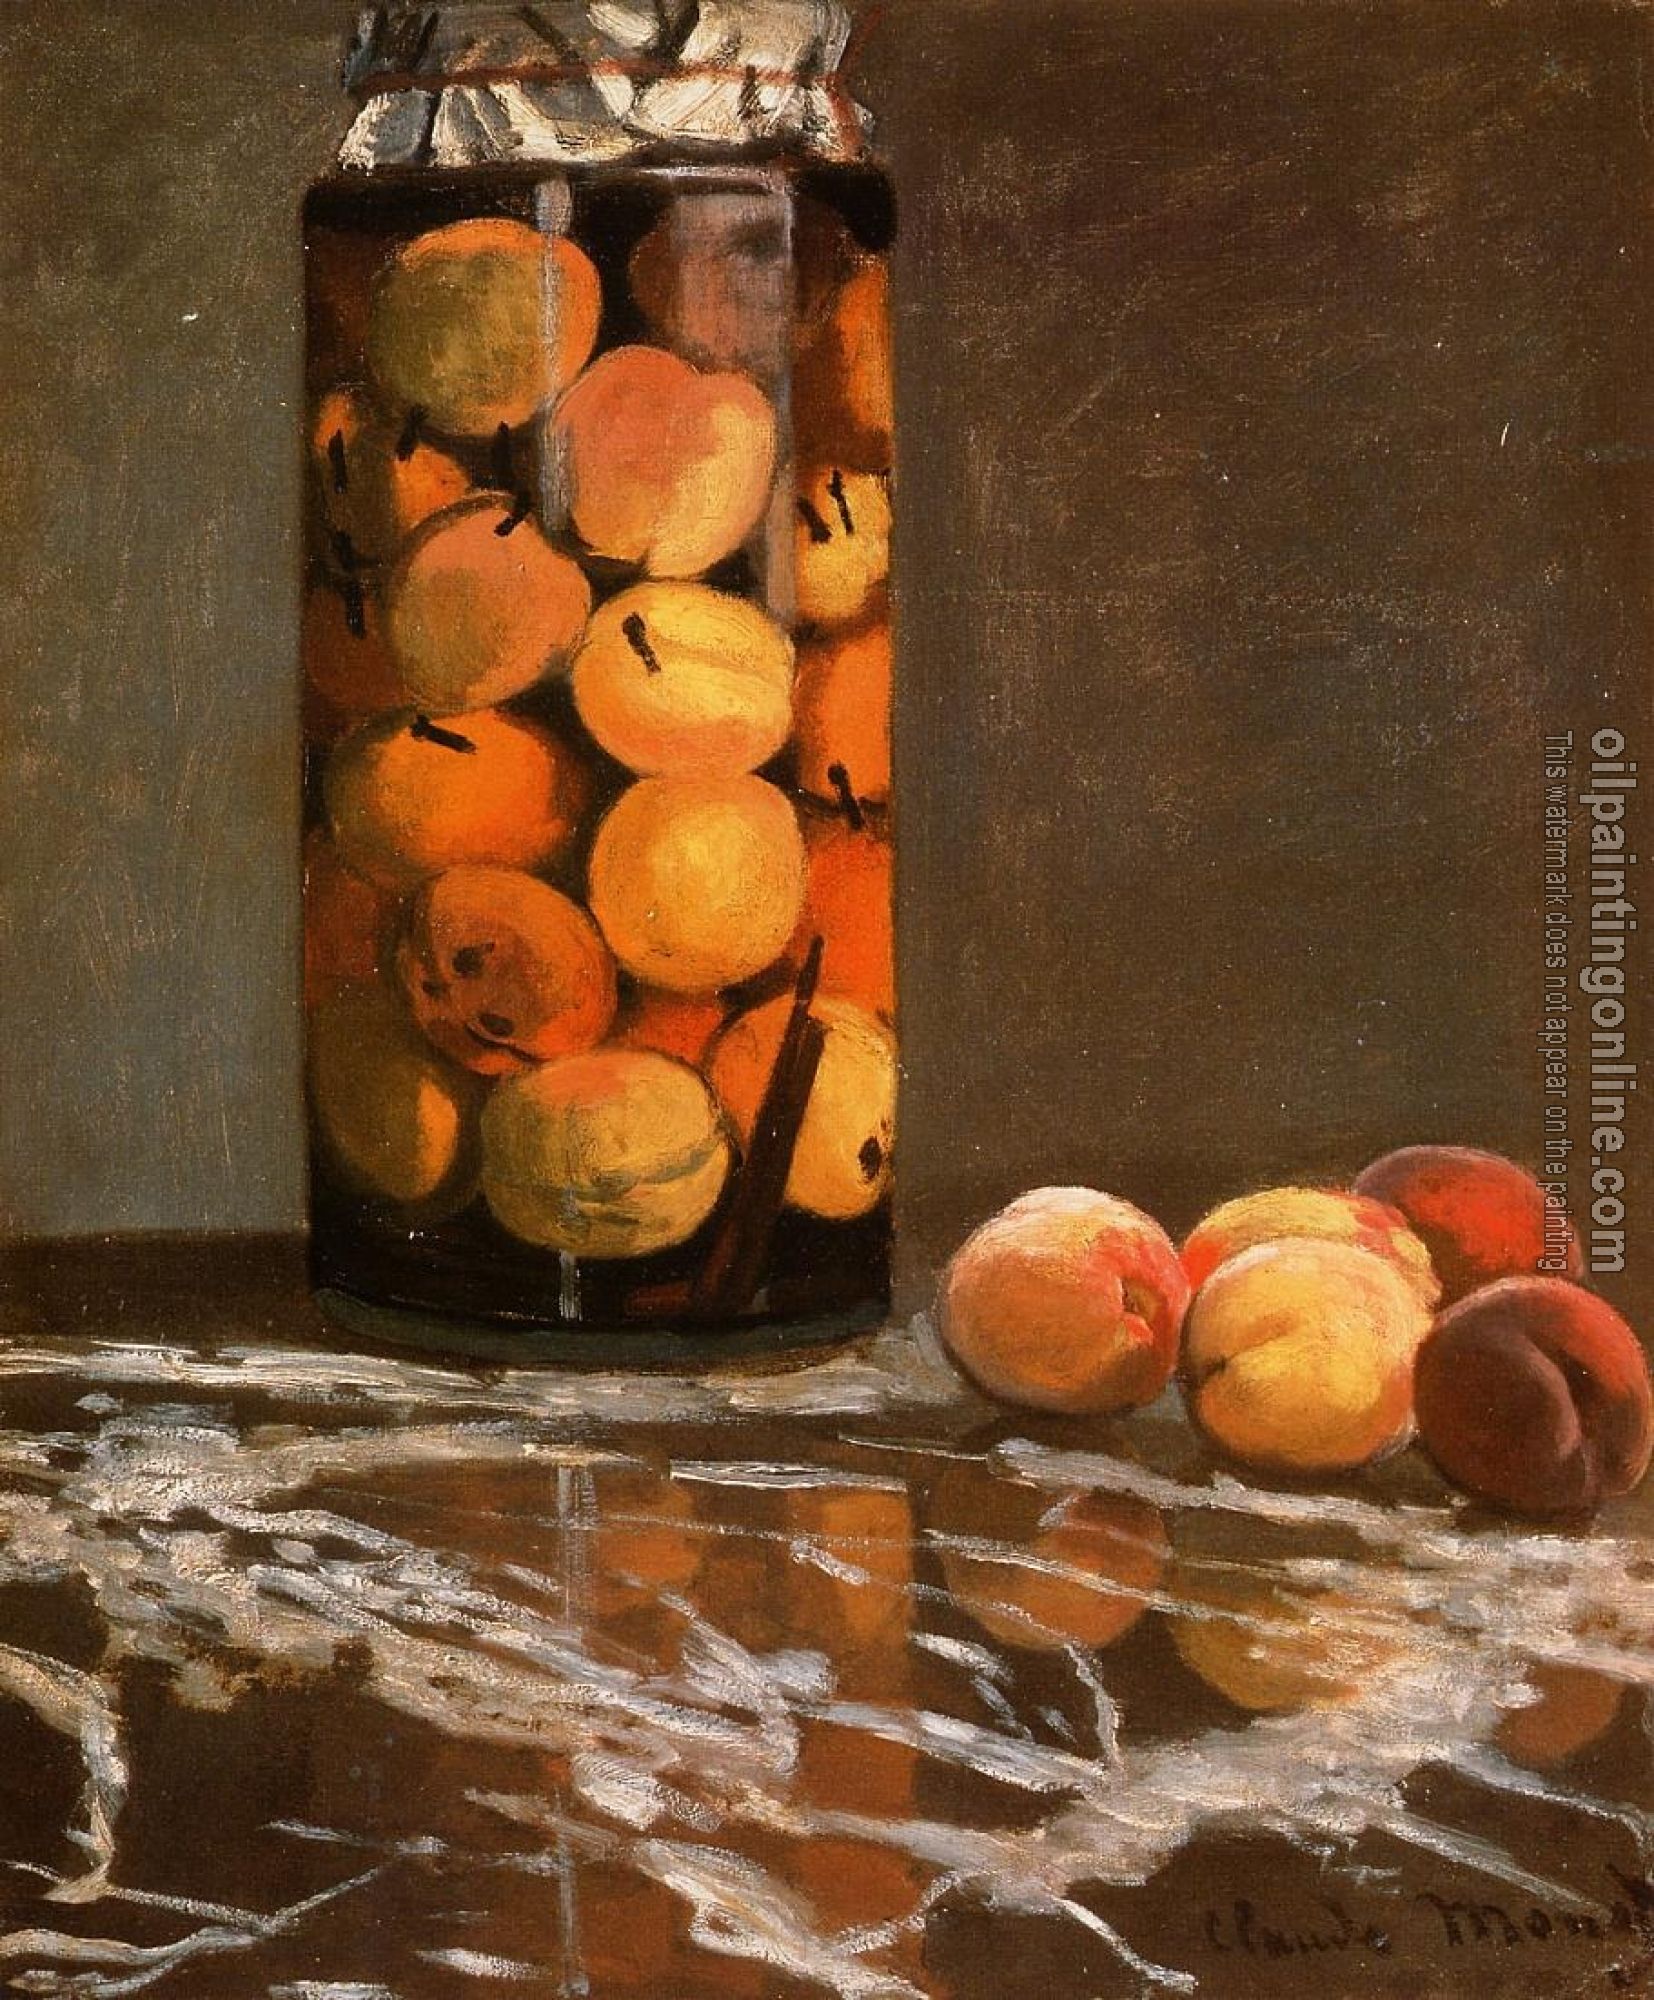 Monet, Claude Oscar - Jar of Peaches